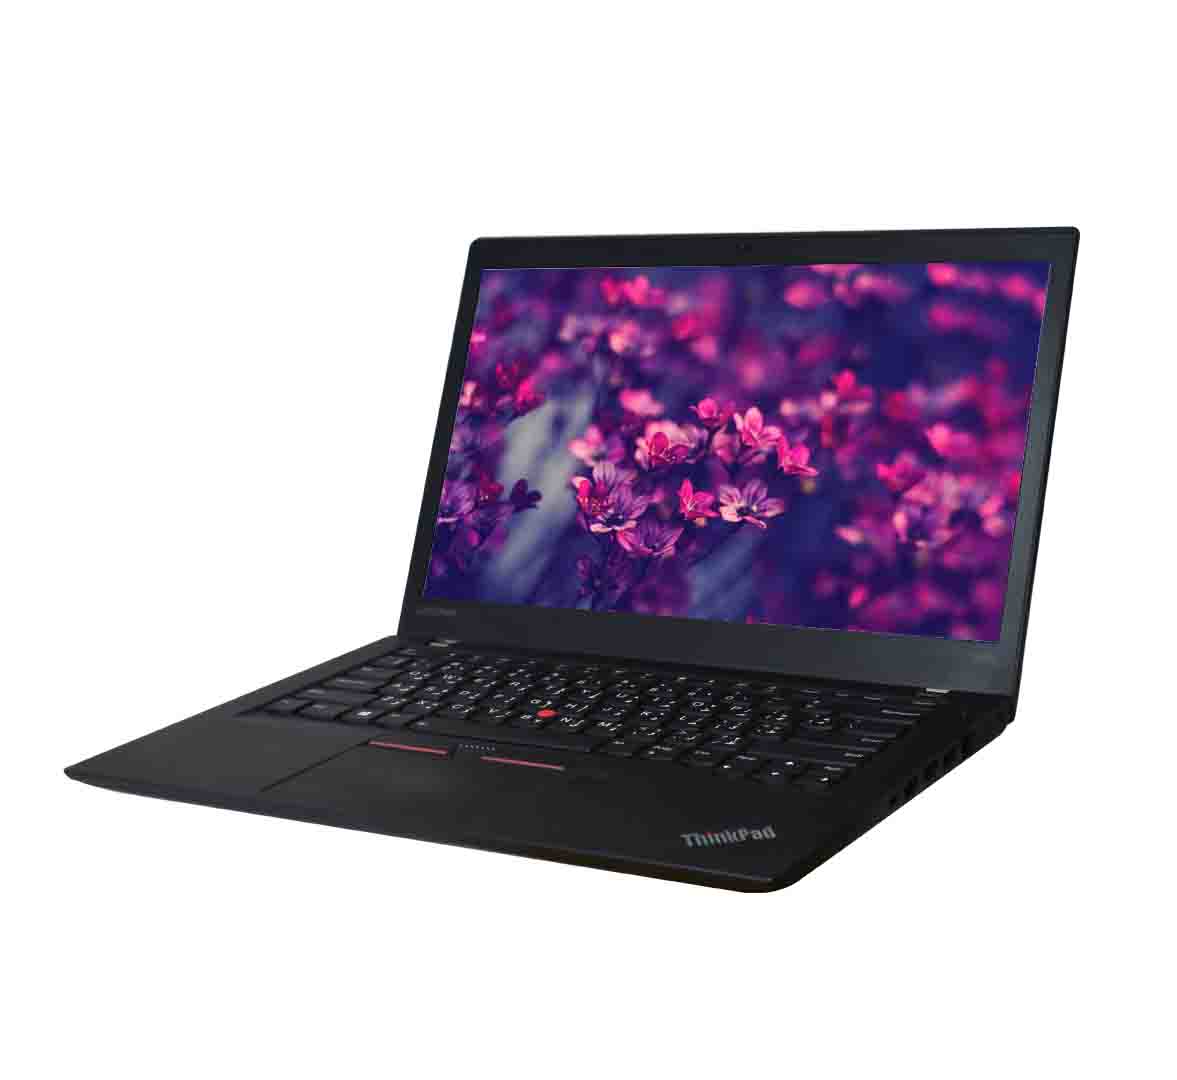 Lenovo ThinkPad T480s Business Laptop, Intel Core i7-8th Generation CPU, 8GB RAM, 512GB SSD, 14 inch Touchscreen Display, Windows 10 Pro